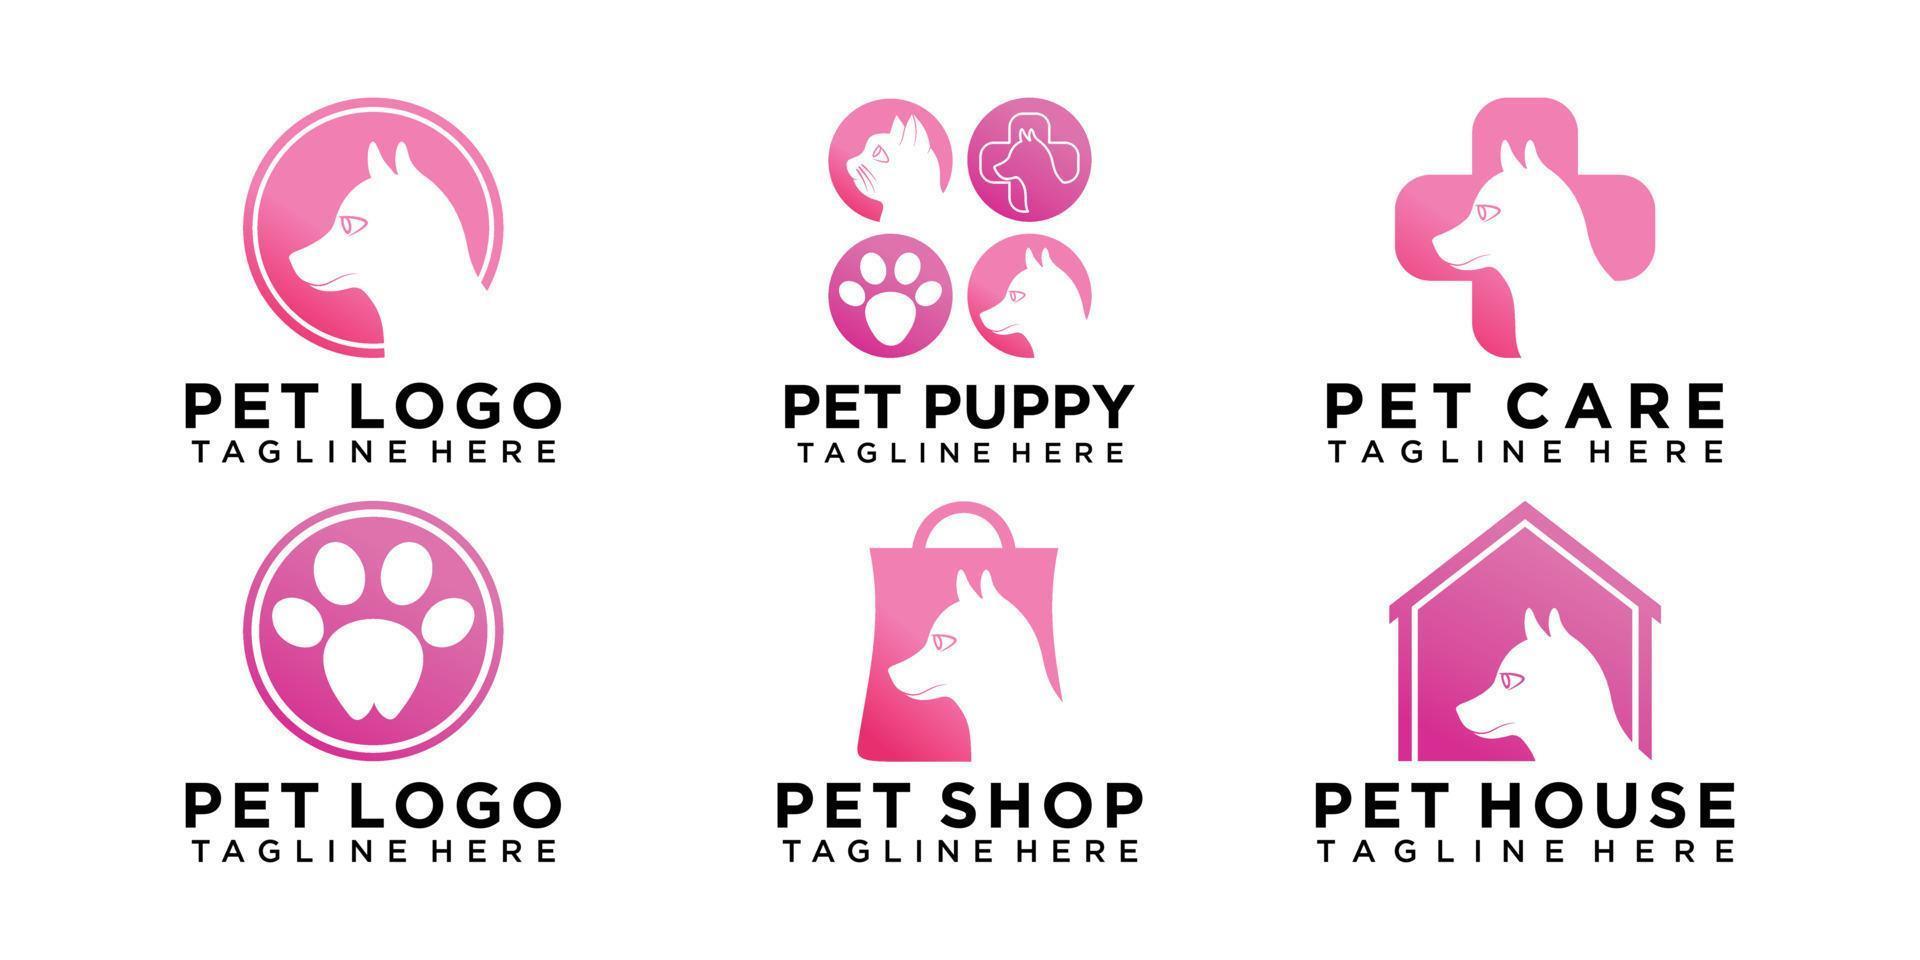 Pet logo design with creative unique style Premium Vector part 2